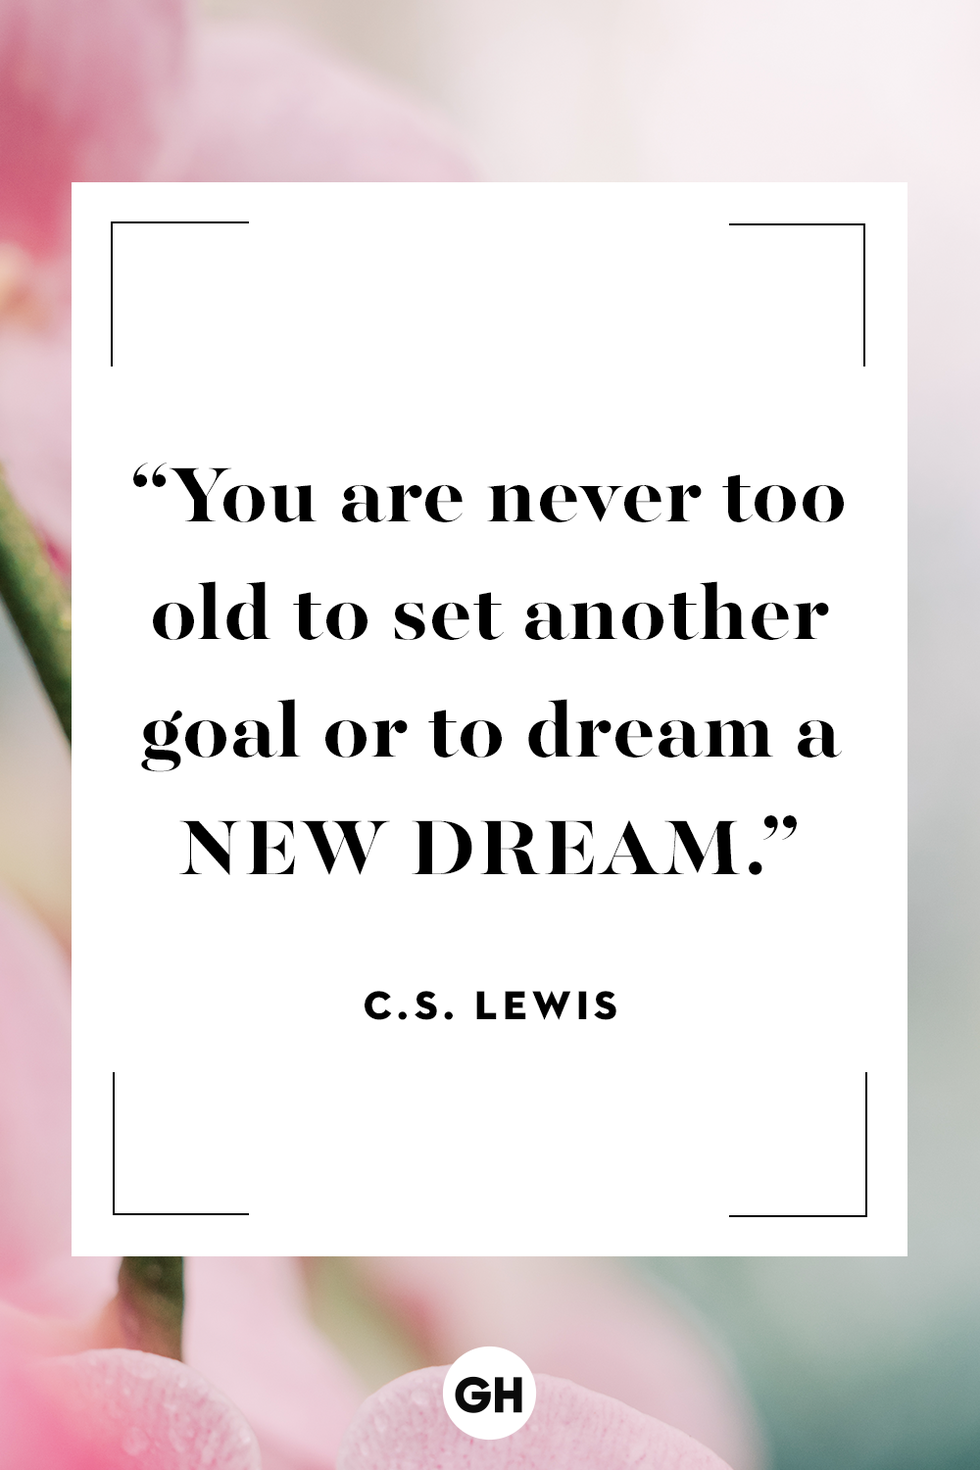 C.S. Lewis inspirational quote